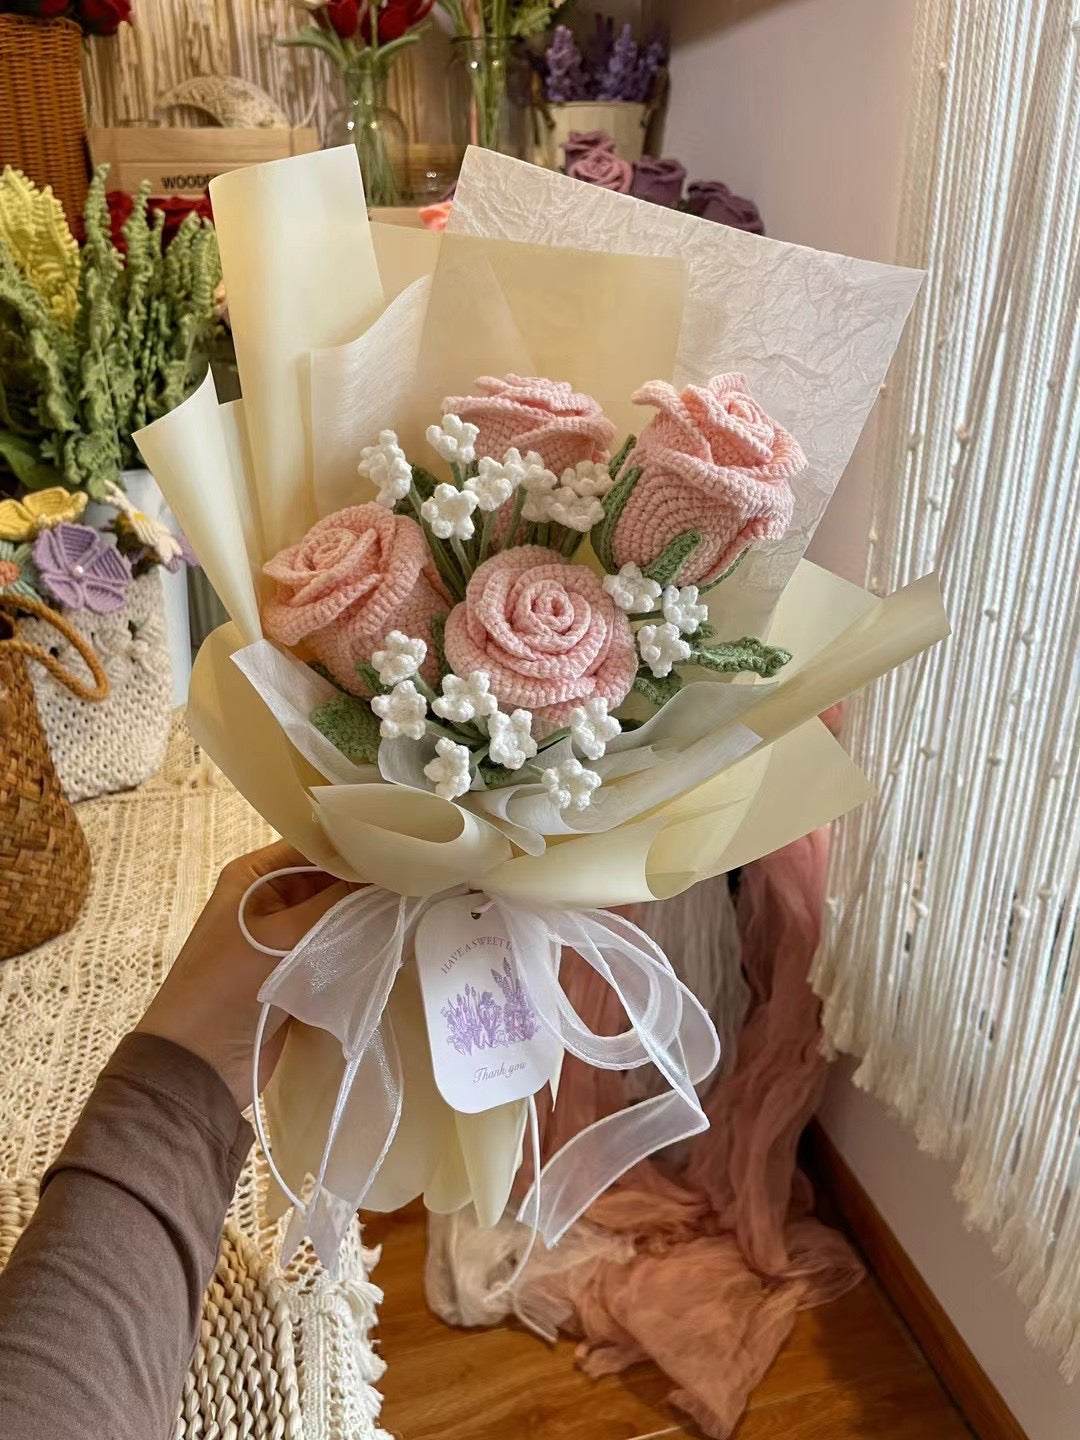 lilyrosy crochet Roses, handmade flower,birthday gift,wedding gift,gift for girlfriend/friend/mom